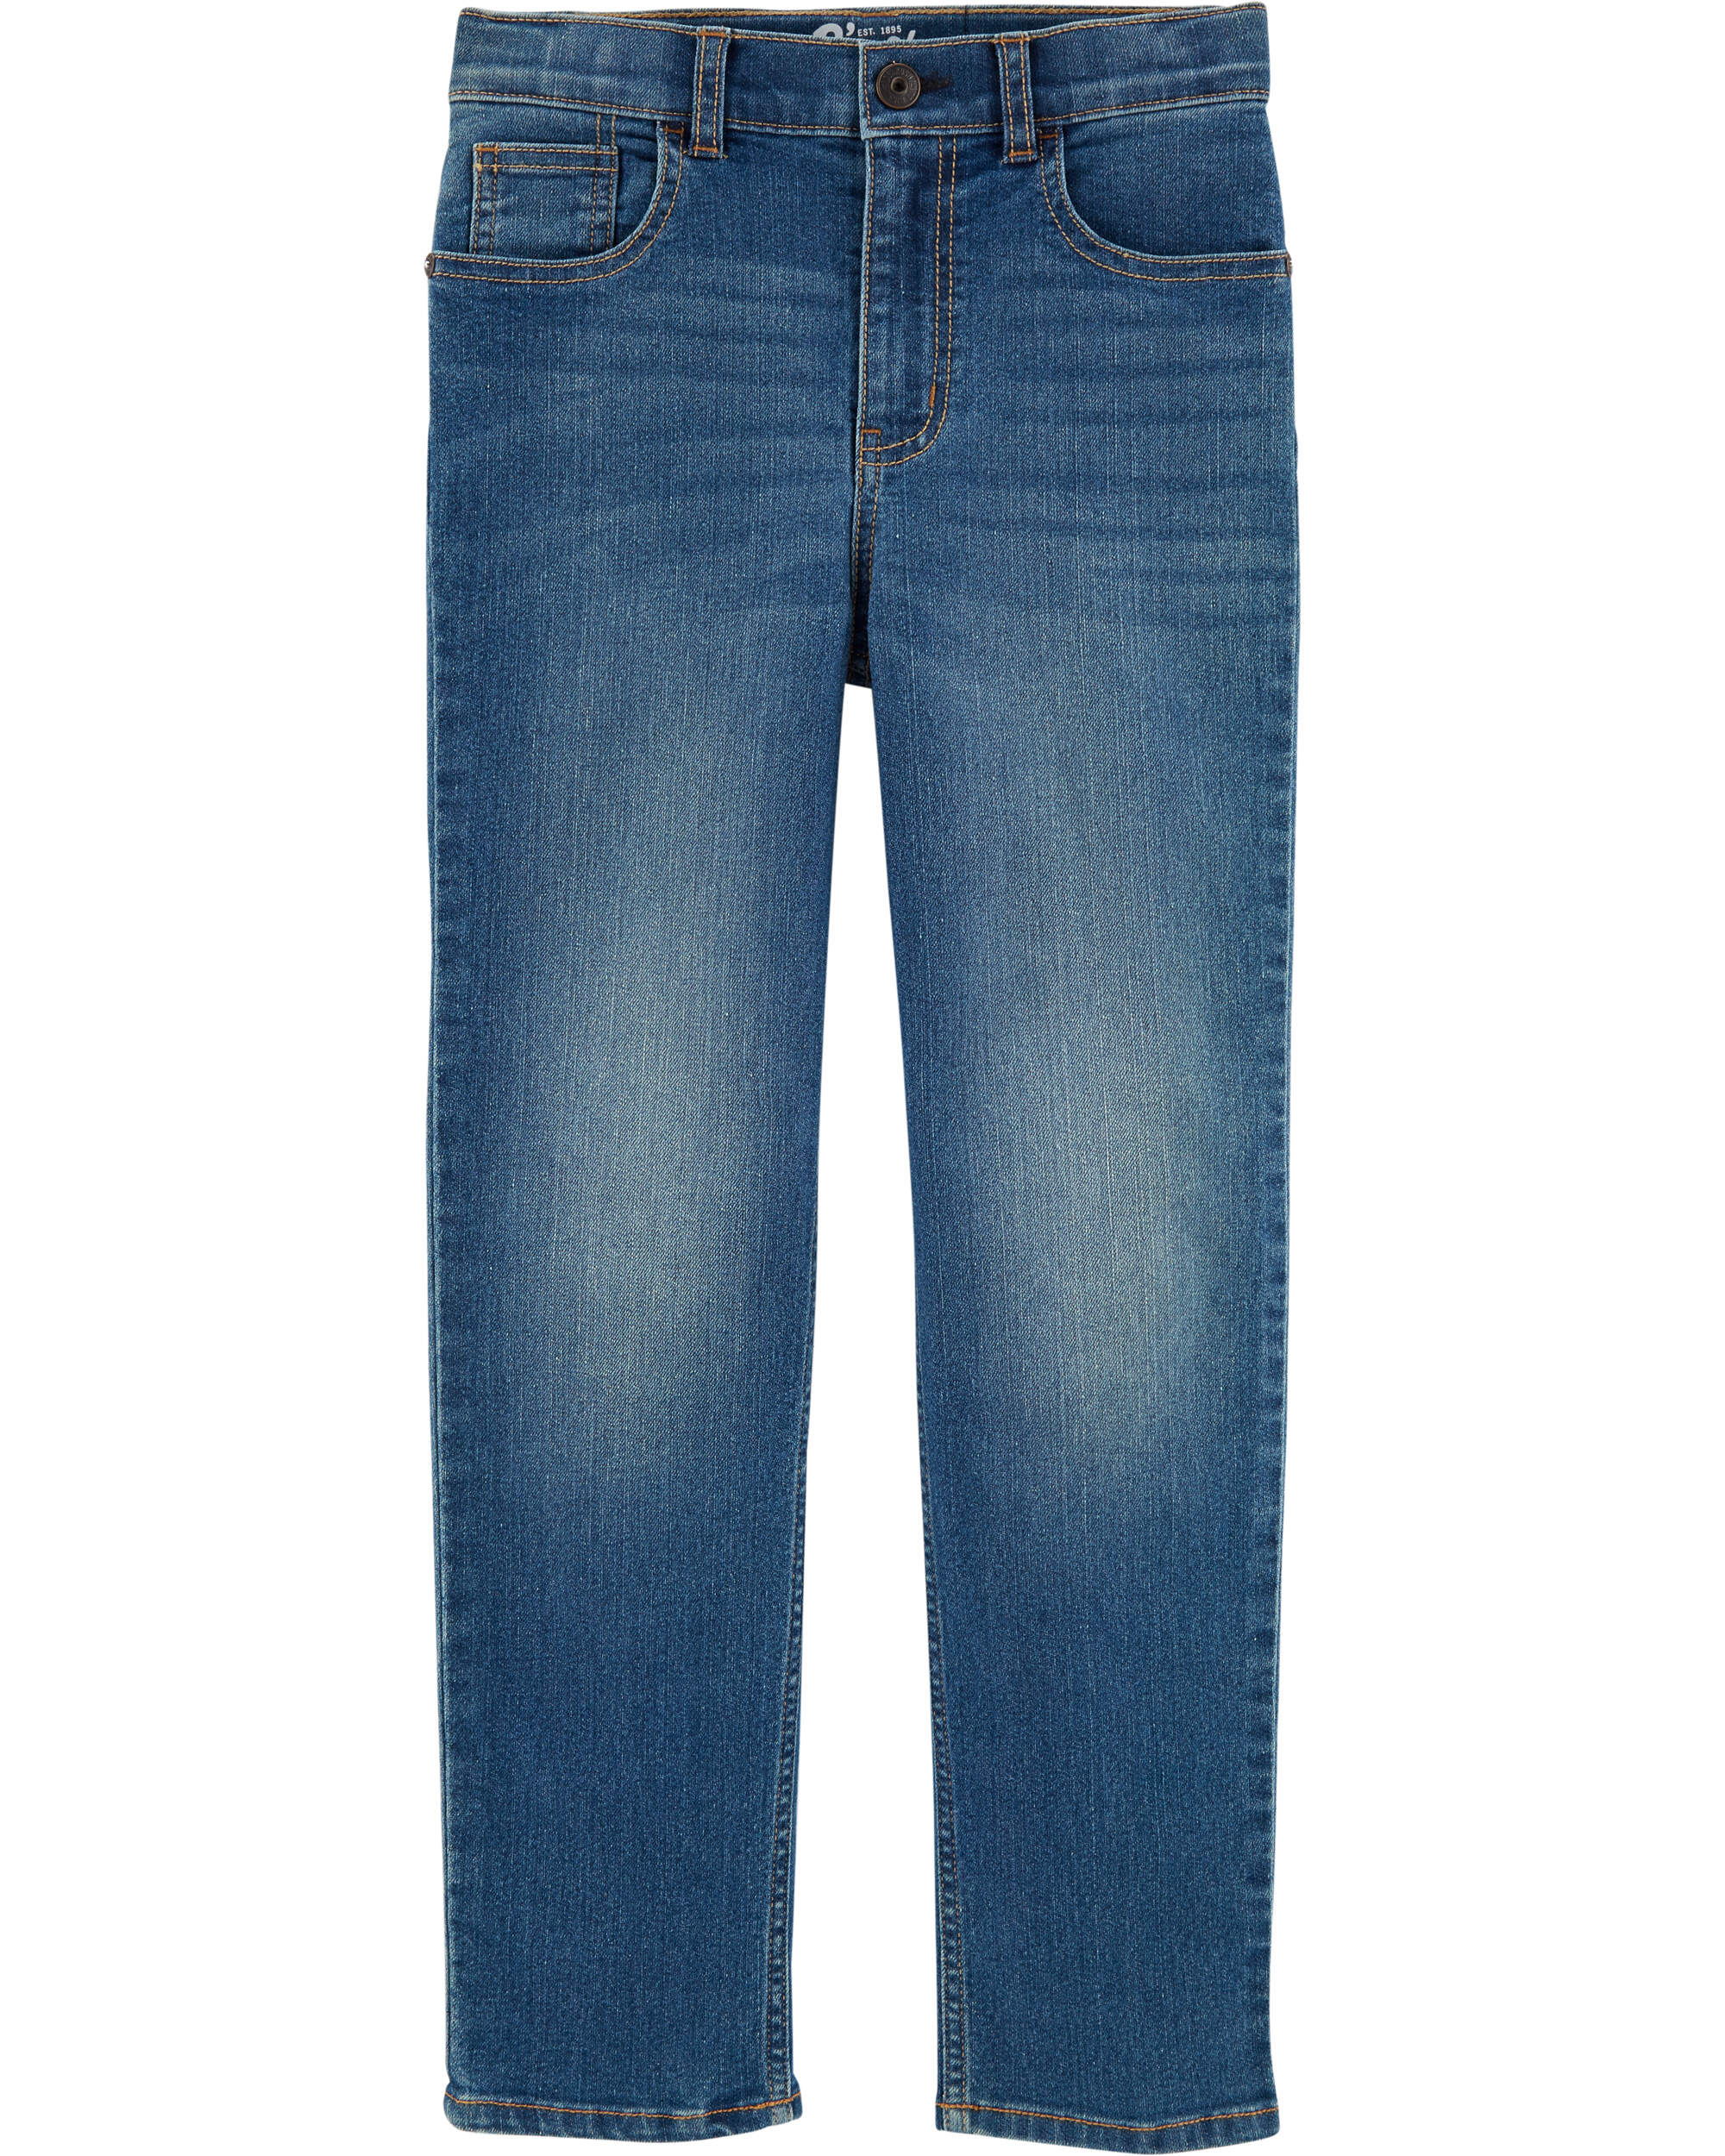 Blue Straight Jeans (Slim Fit) In Anchor DarkWash